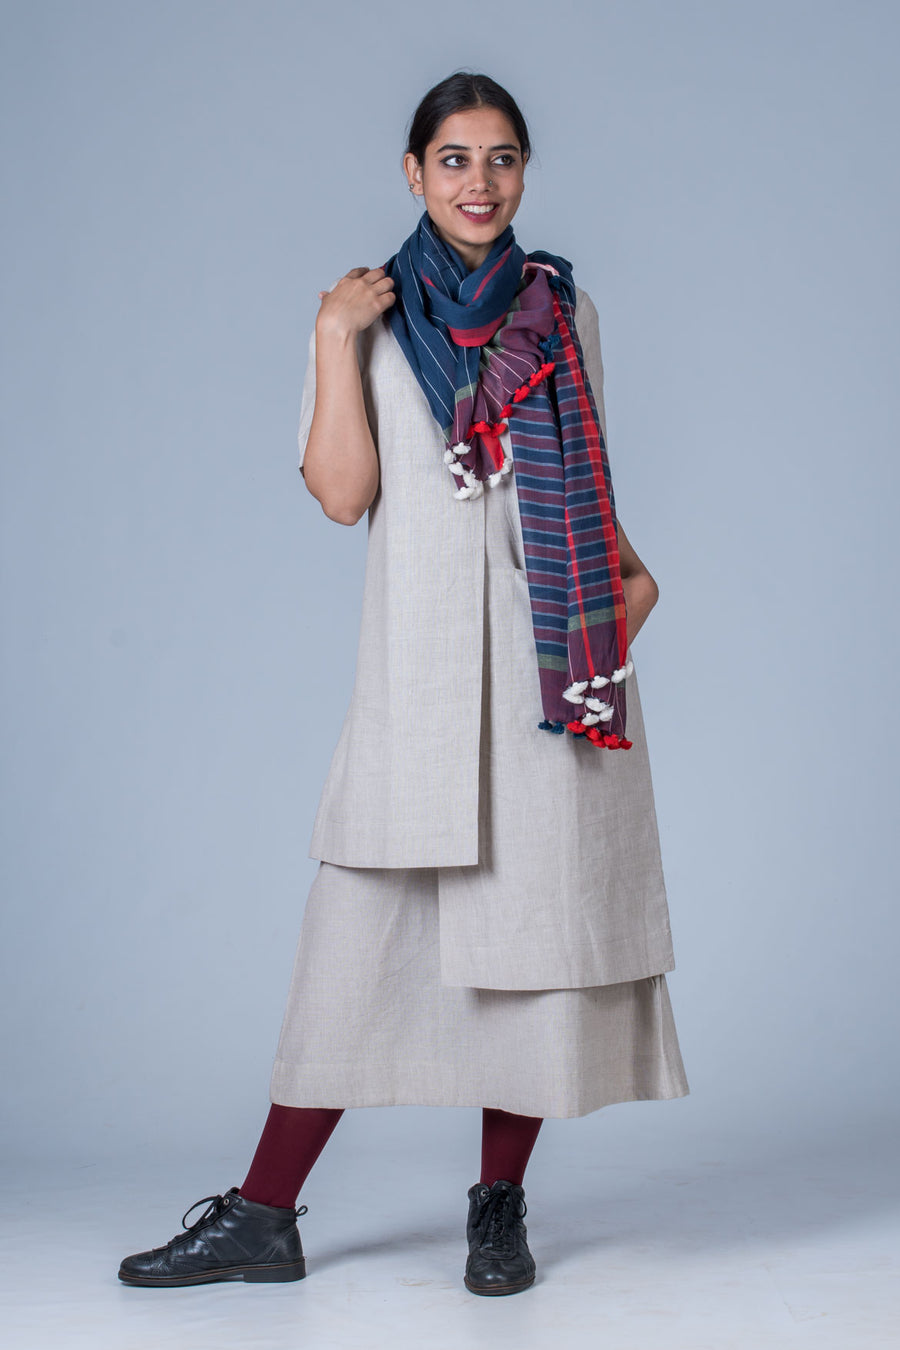 Grey Organic cotton Dress - SANGYA - Upasana Design Studio